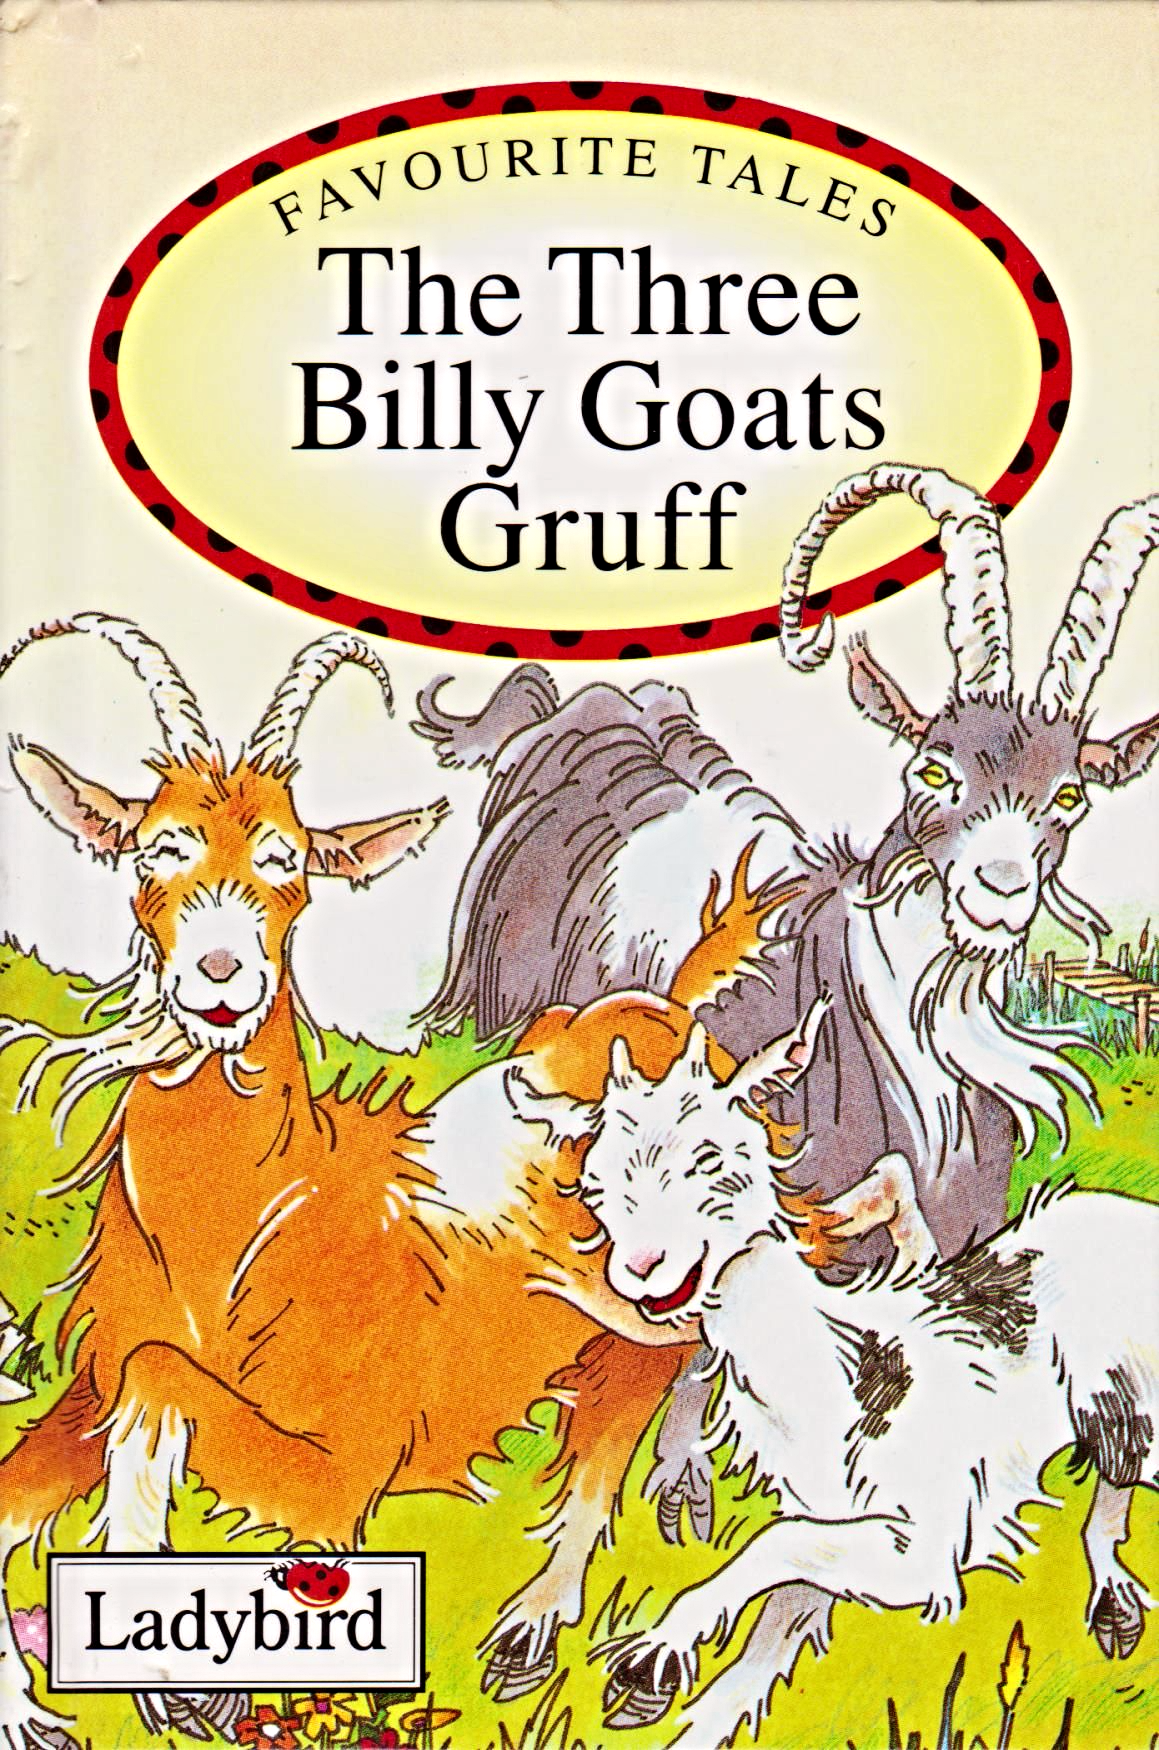 Billy Goat Gruff Clipart, Bil